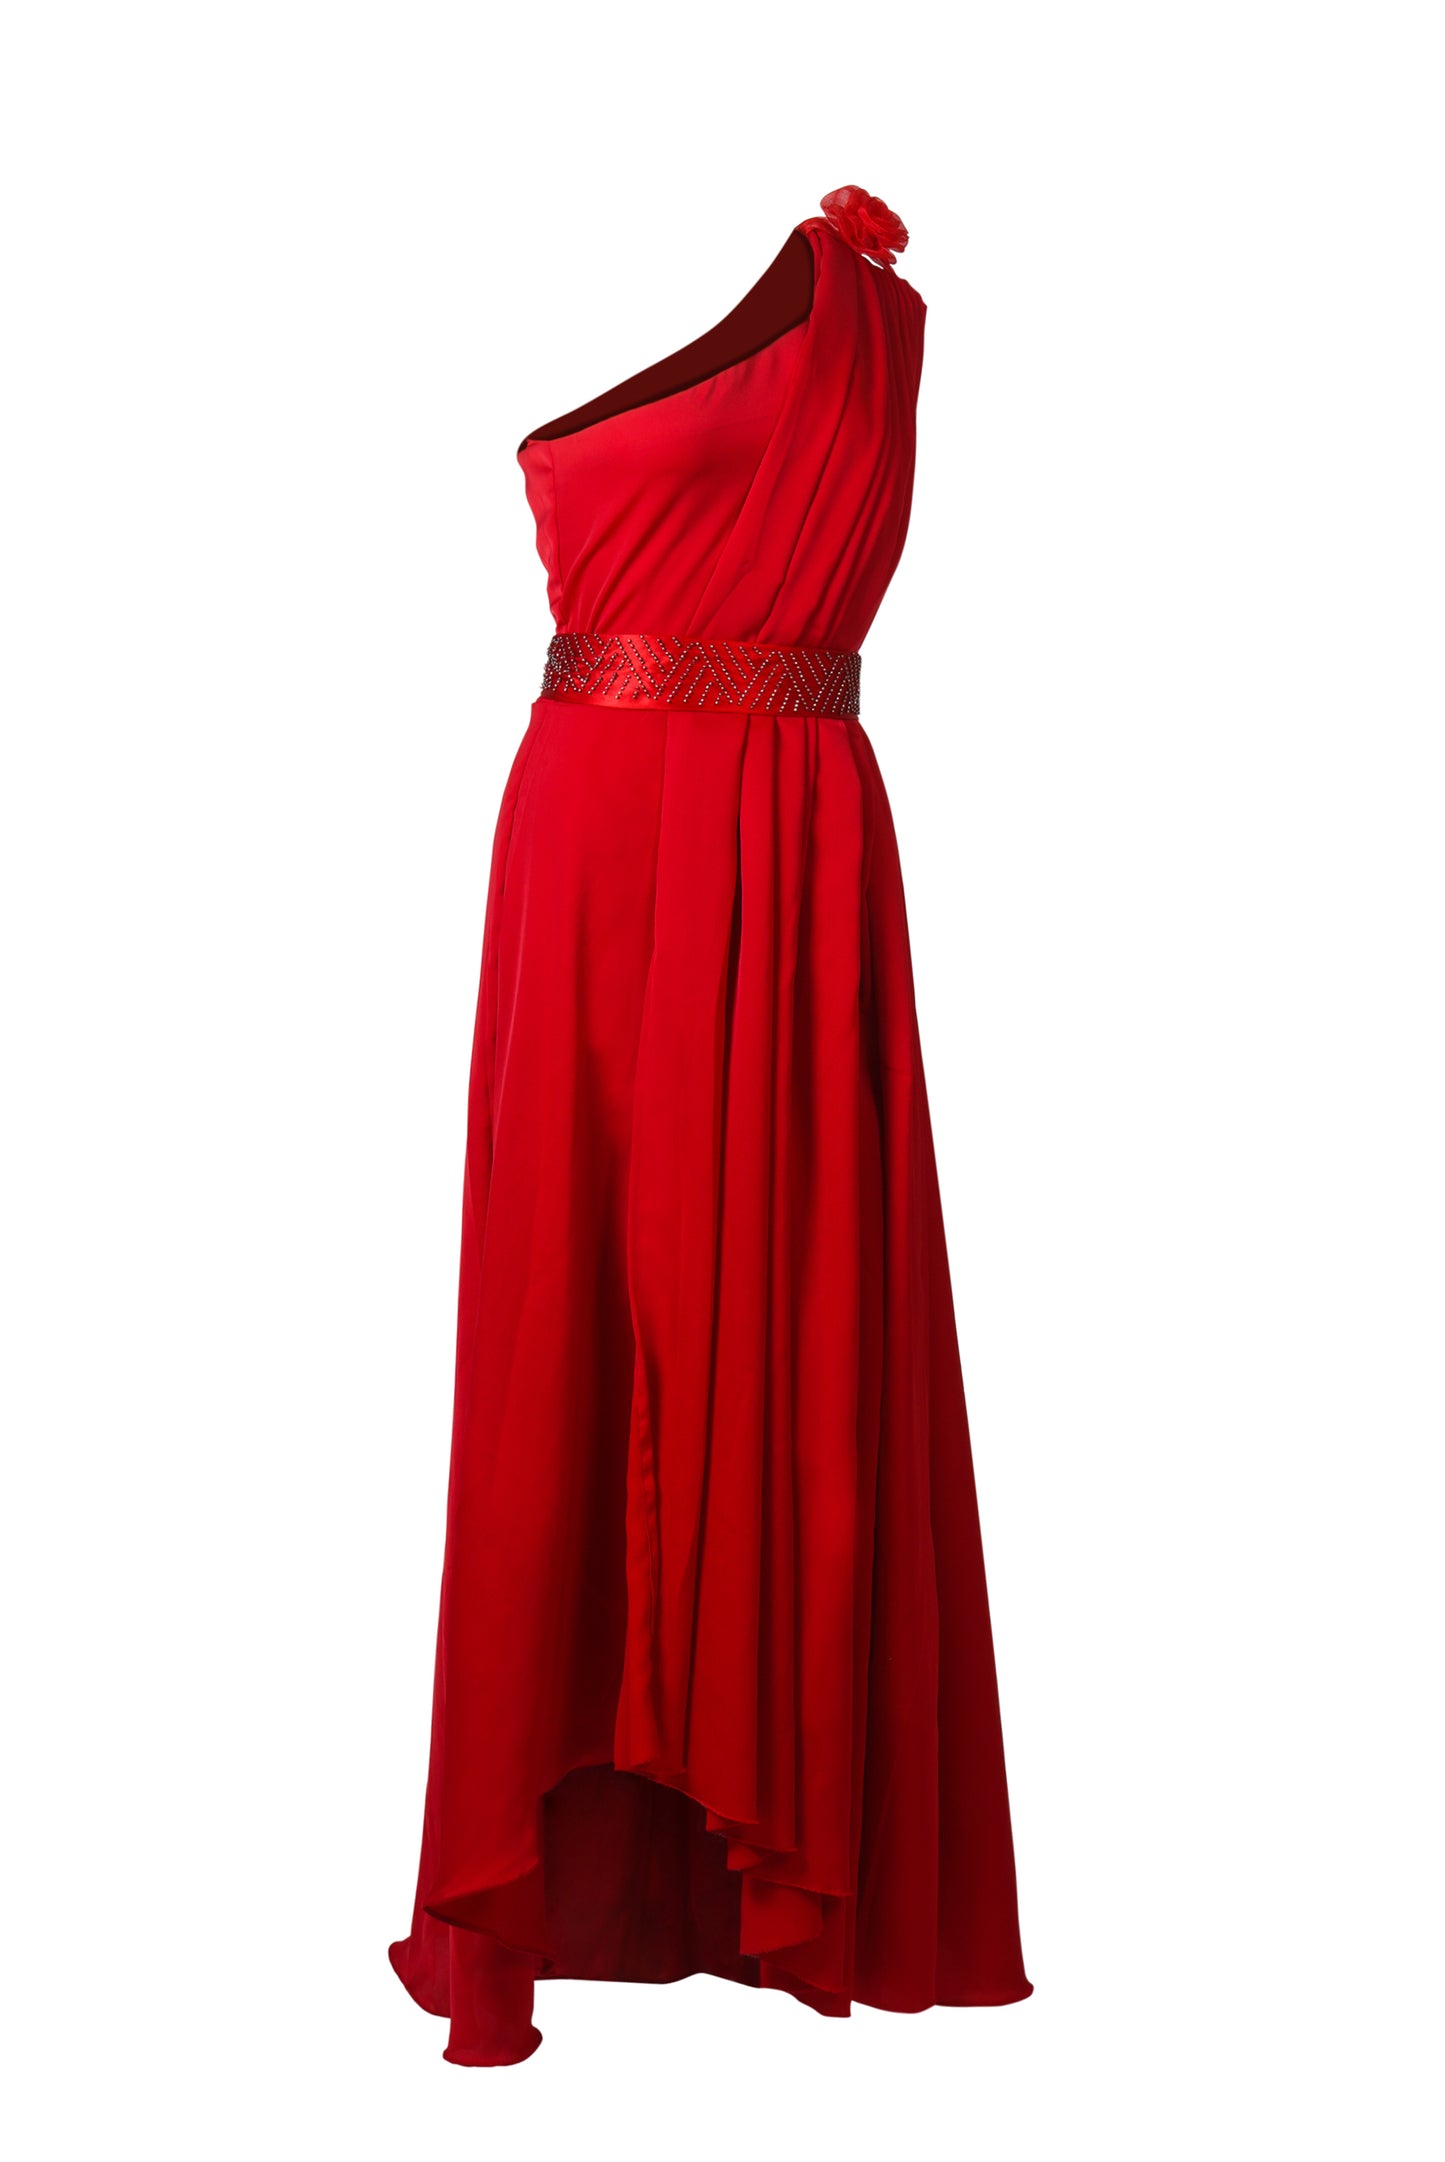 ZIA031 Off Shoulder Red Gown With Beadwork Belt